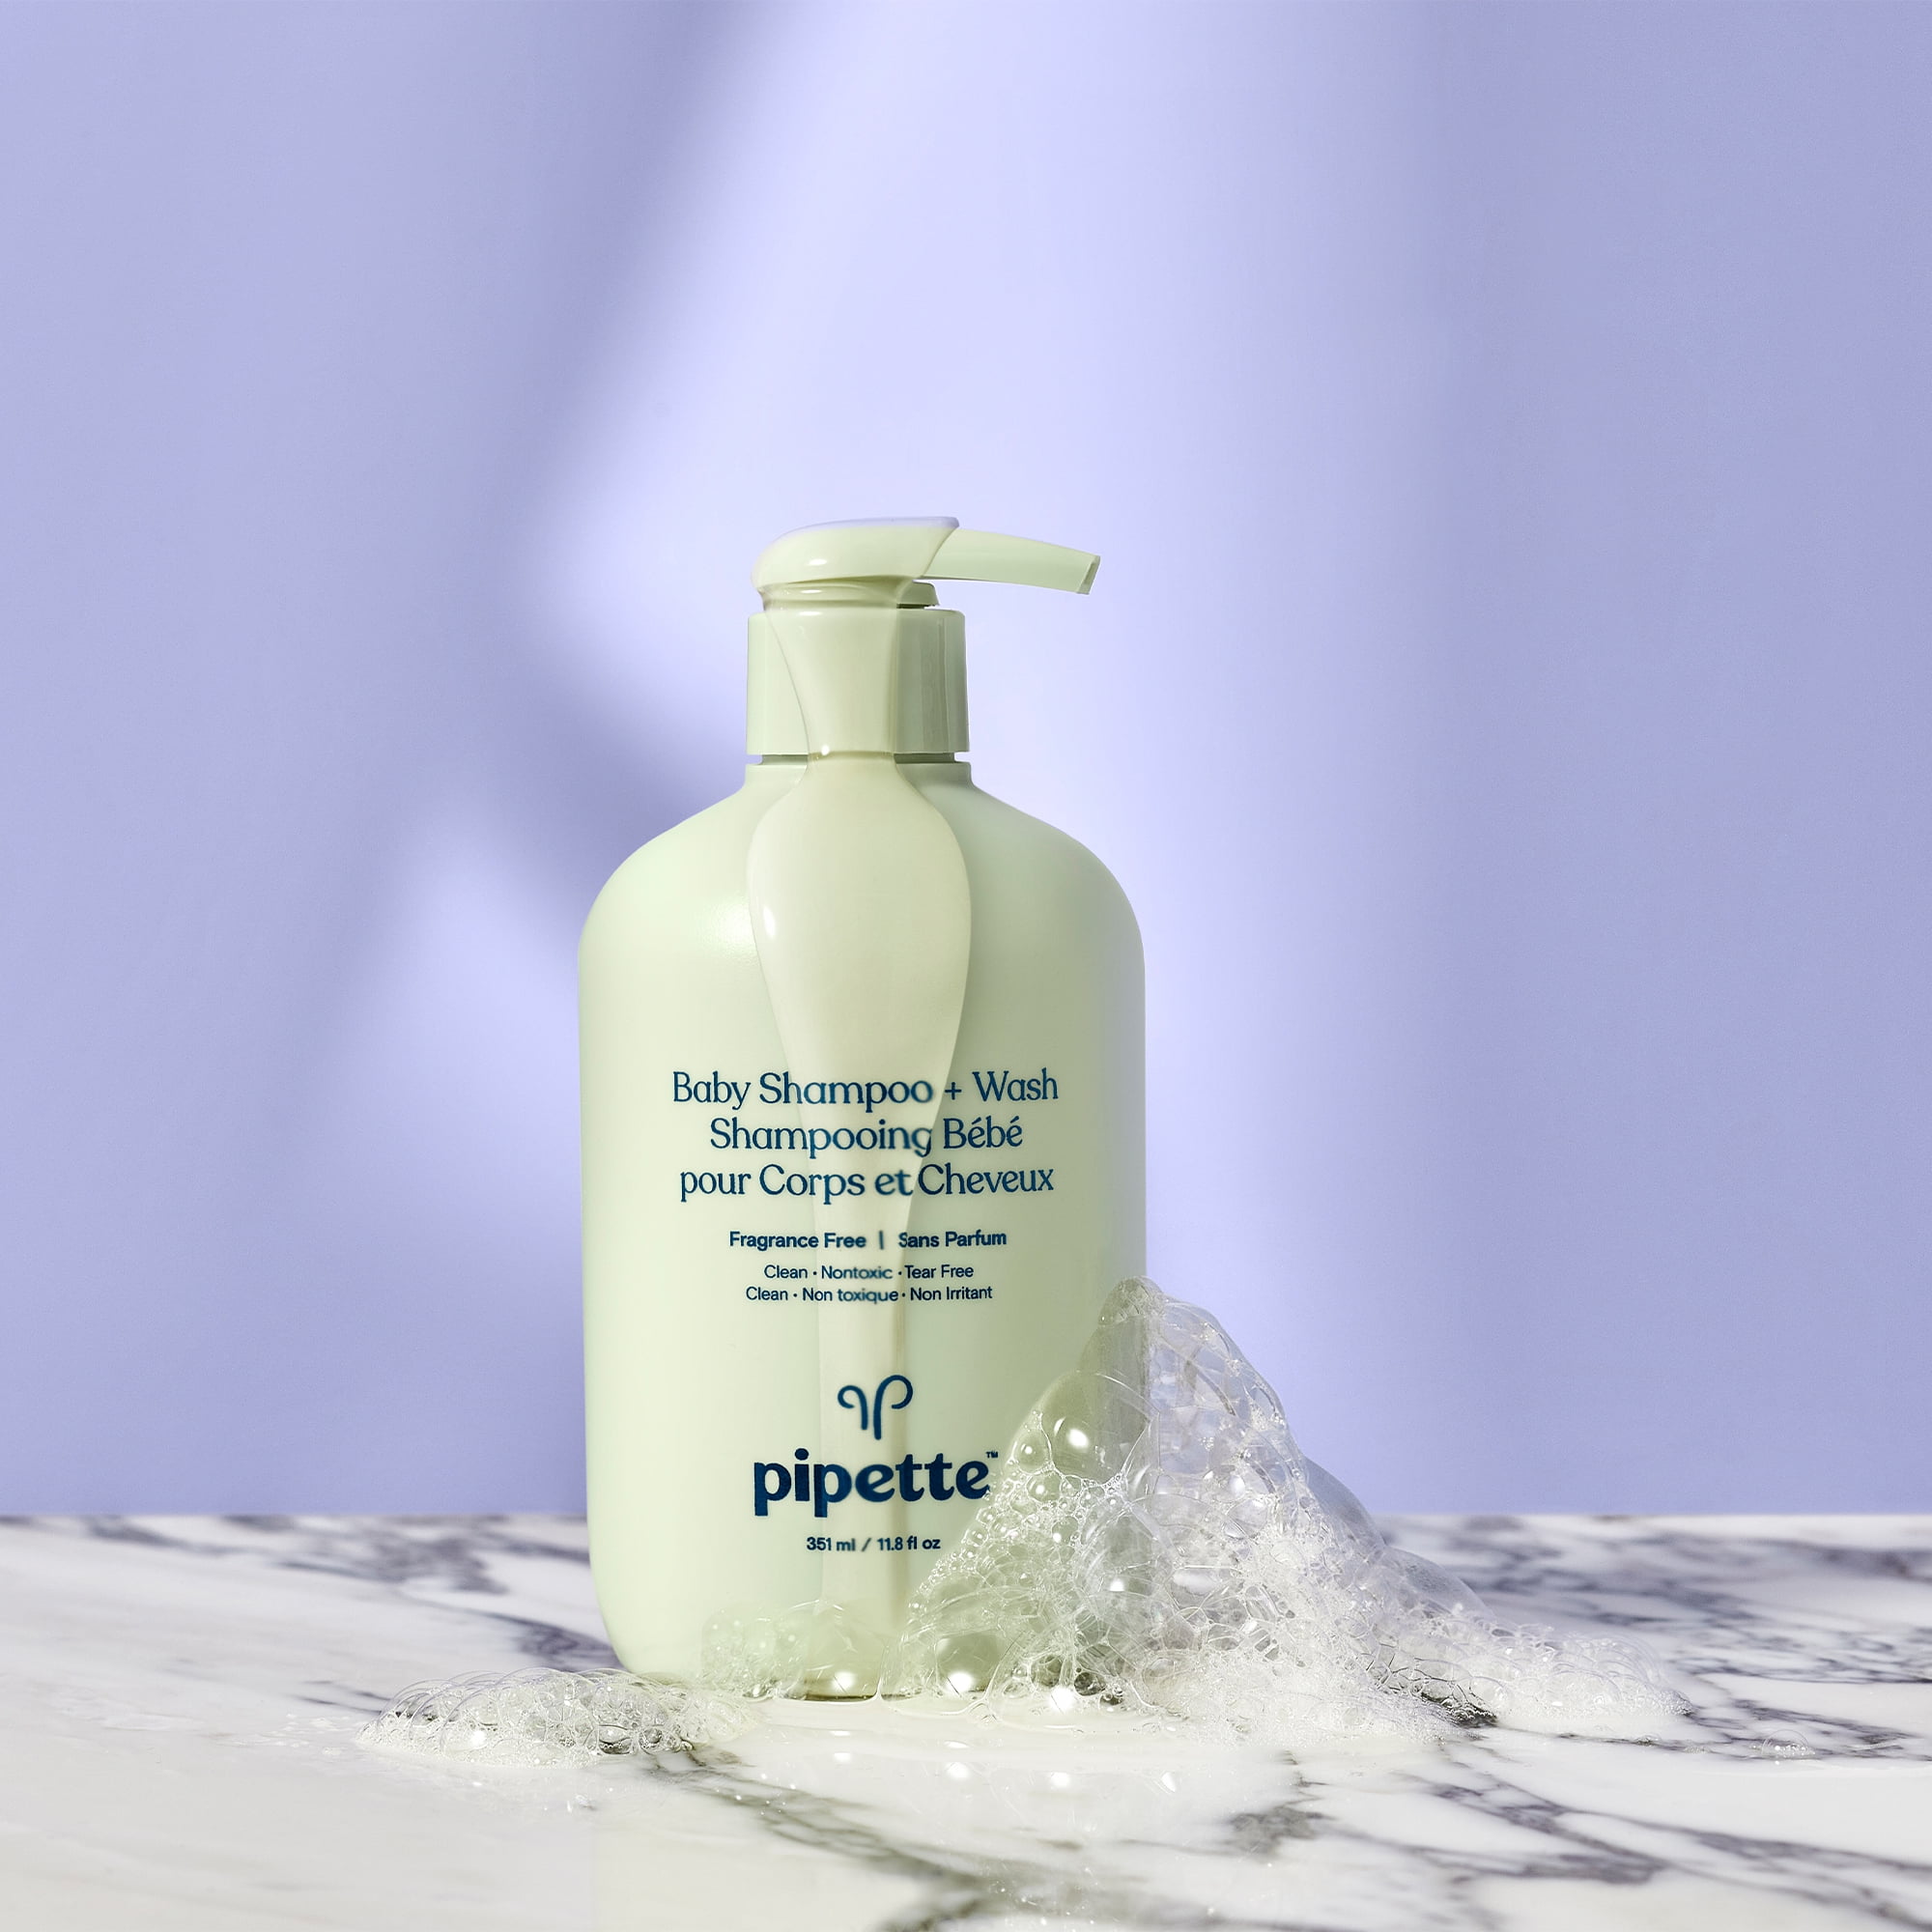 Pipette Tear-Free Baby Shampoo & Fragrance-Free for Sensitive Skin, 11.8 fl oz Walmart.com